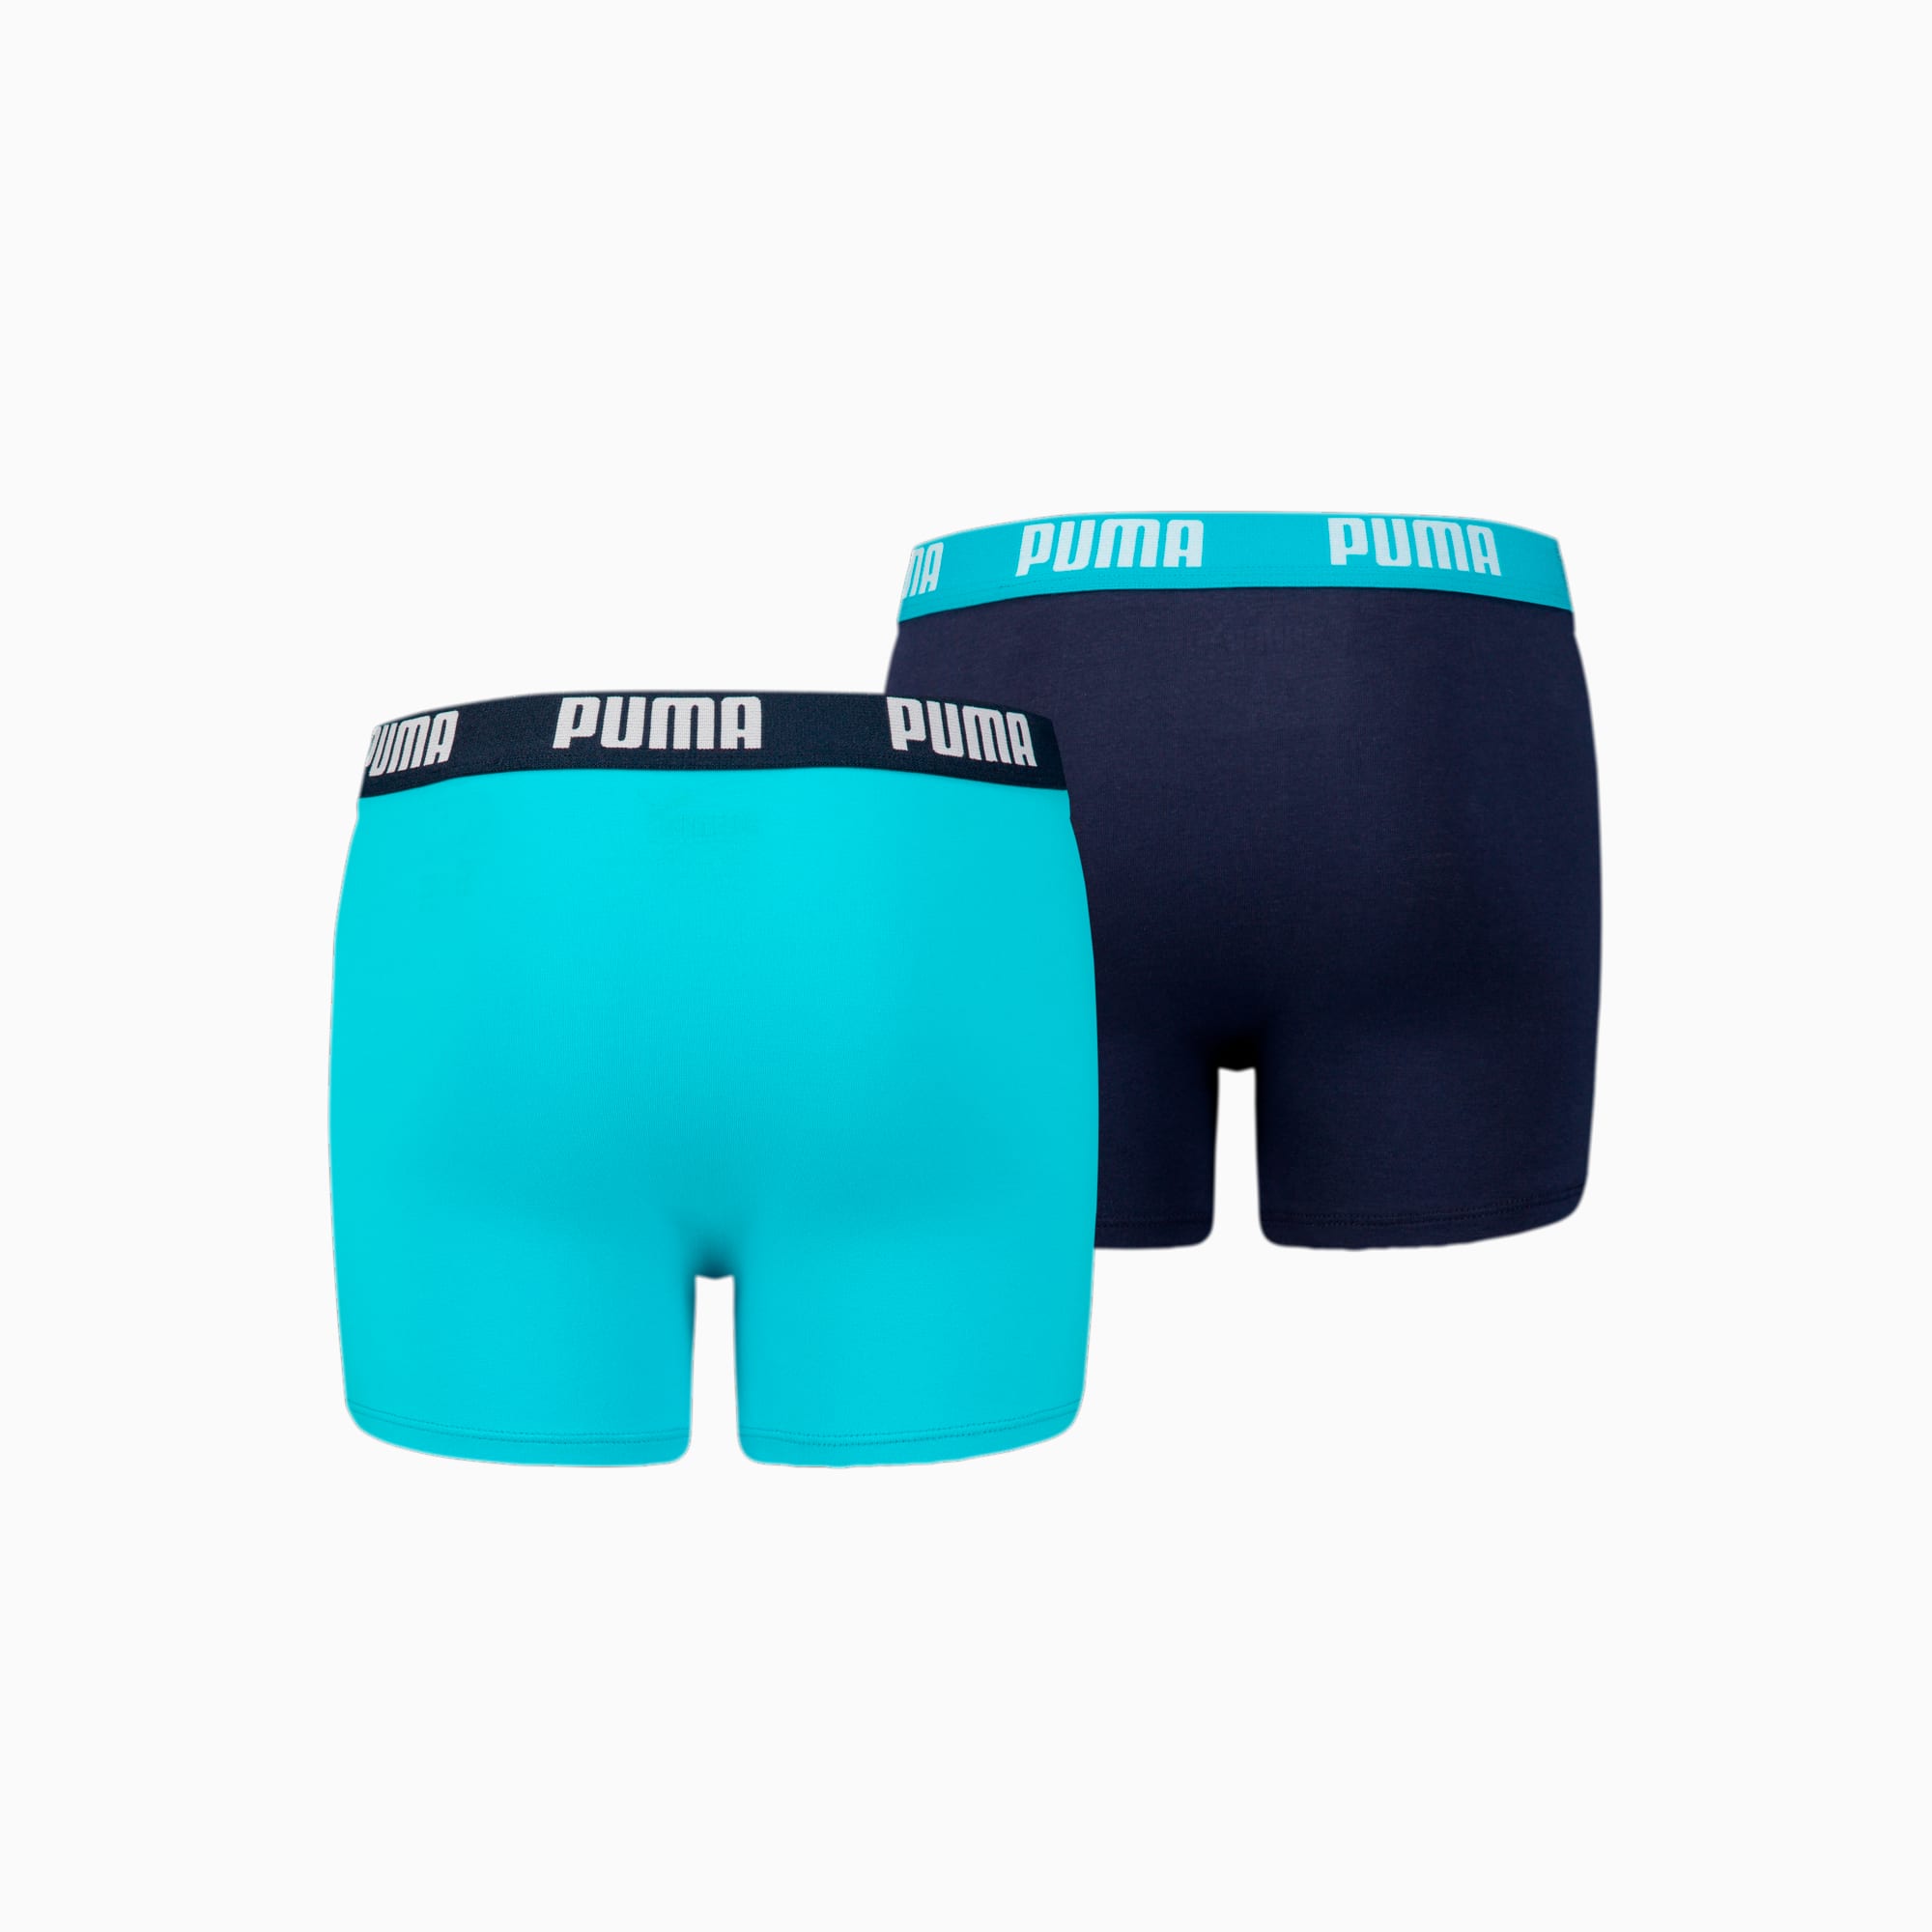 PUMA Boys' Basic Boxer 2 Pack, Bright Blue